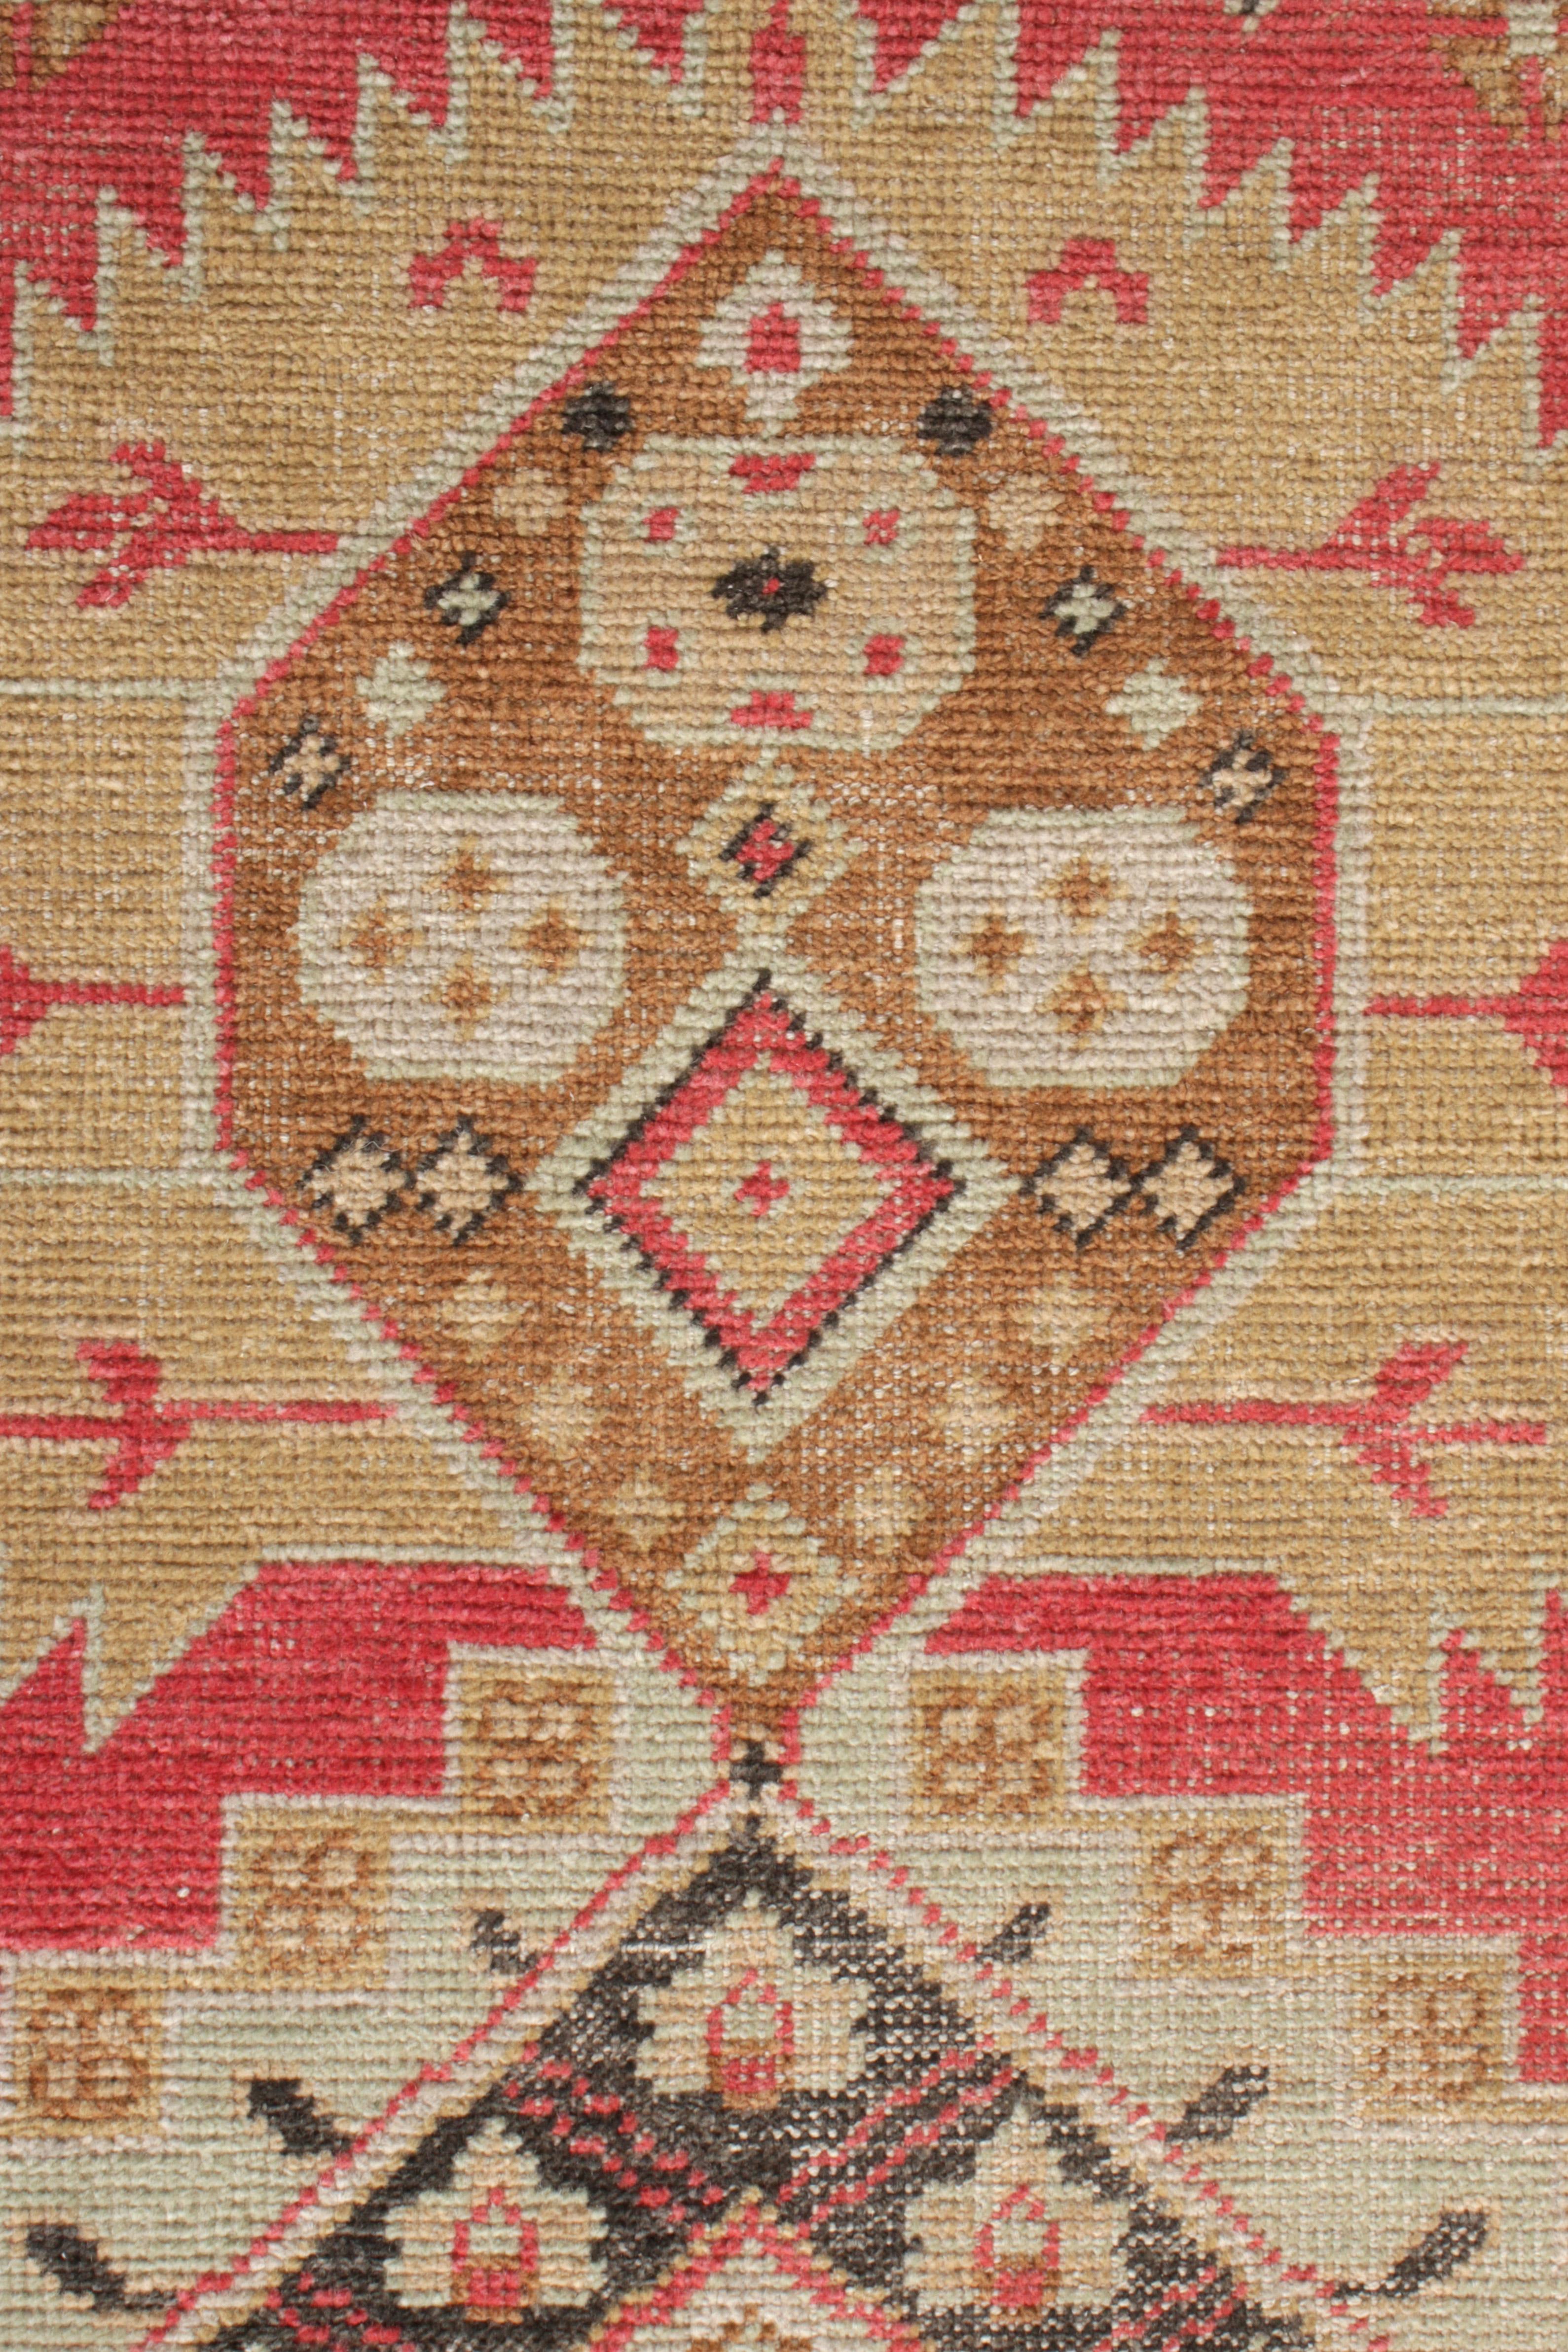 Rug & Kilim's Distressed Classic Style Teppich in Rot, Beige-Braun mit Medaillon-Muster (Indisch) im Angebot